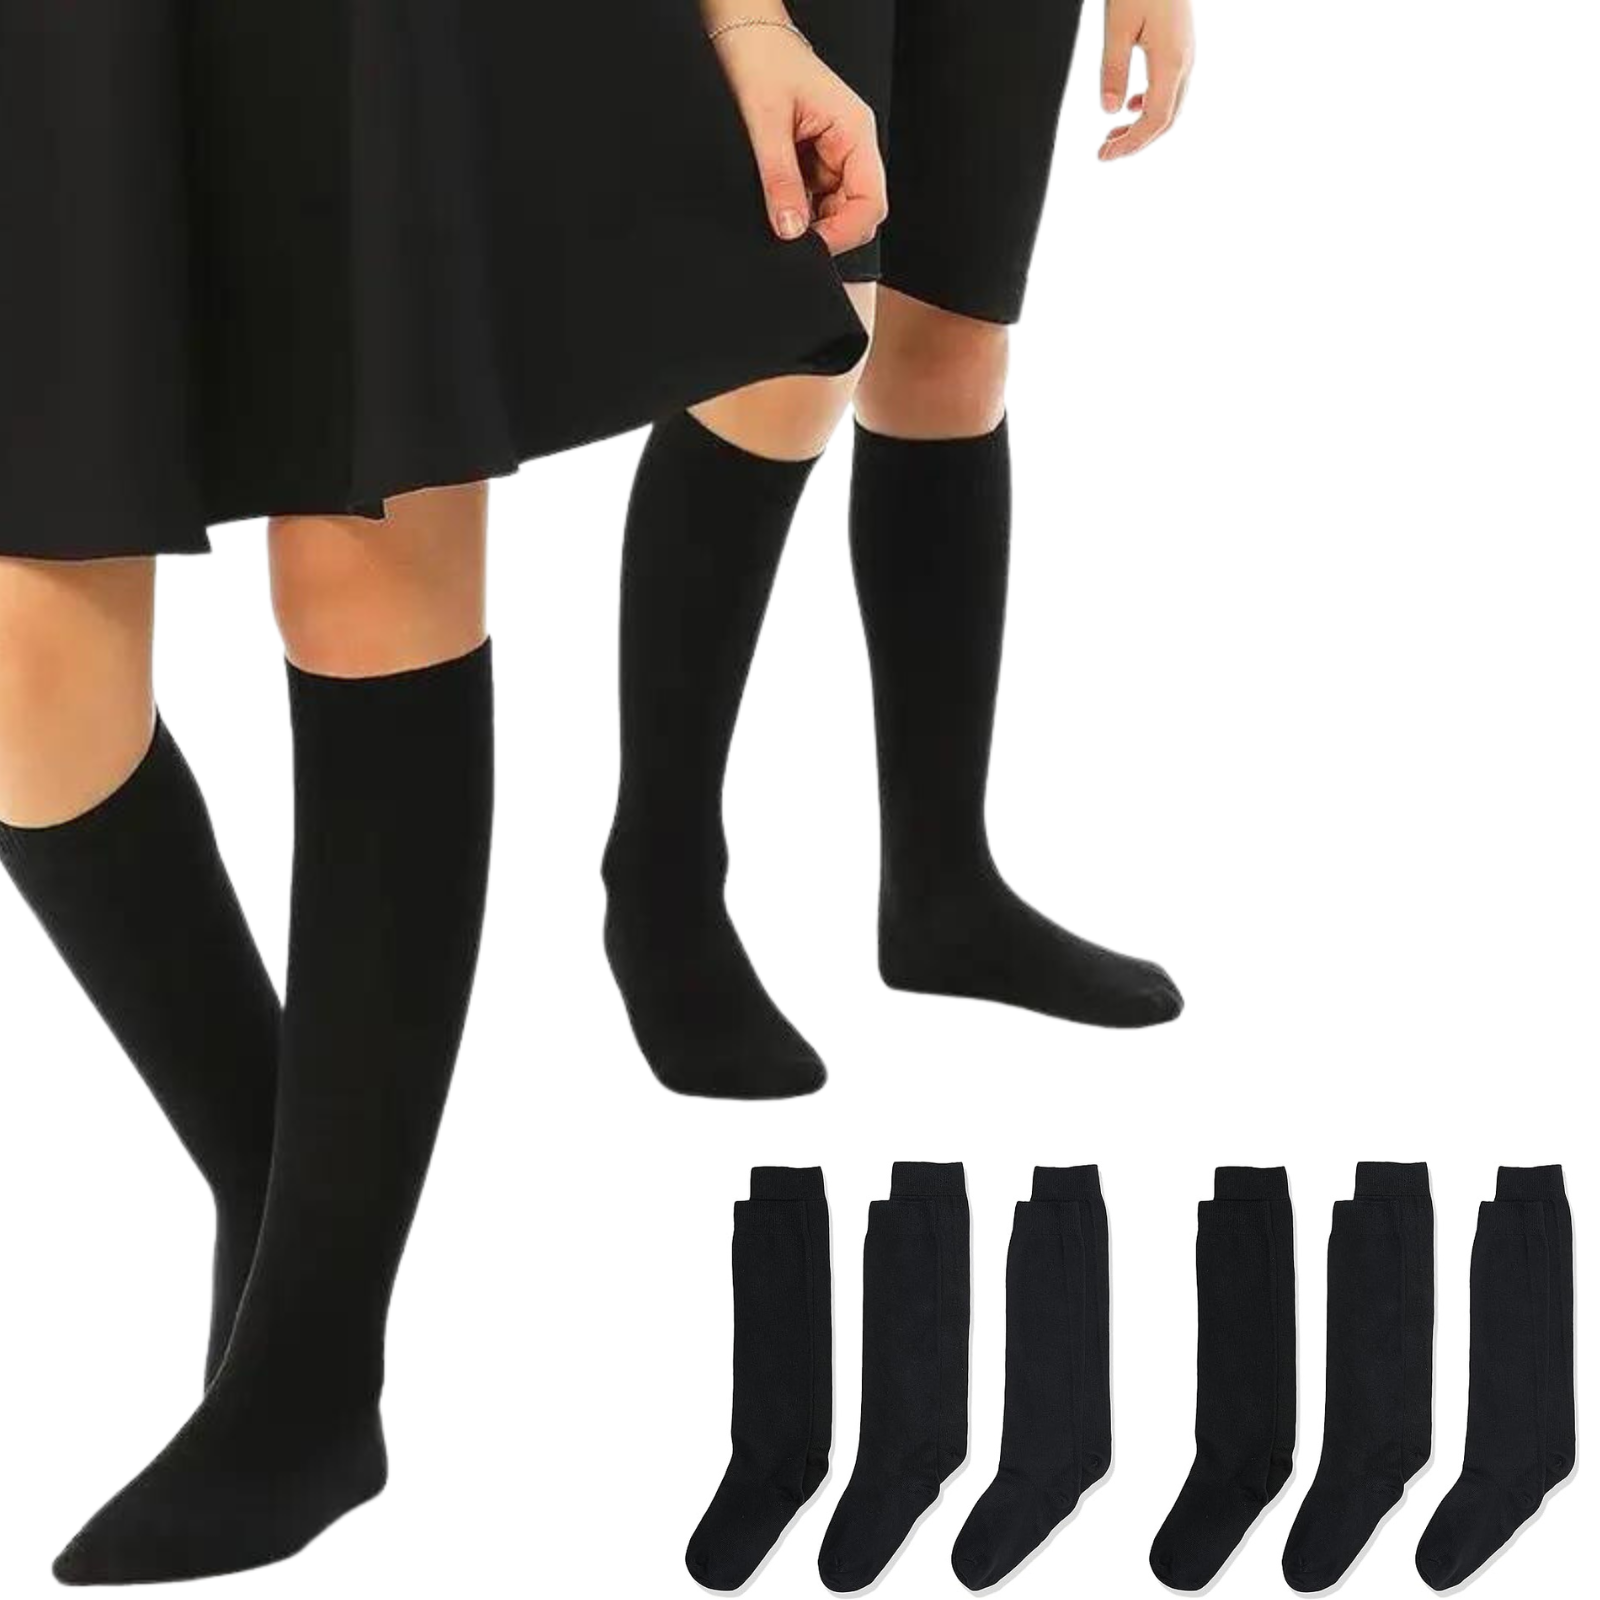 6x Pairs School Uniform Knee High Socks Cotton Rich Girls Boys Kids Bulk - Black - 9-12 (5-8 Years Old)